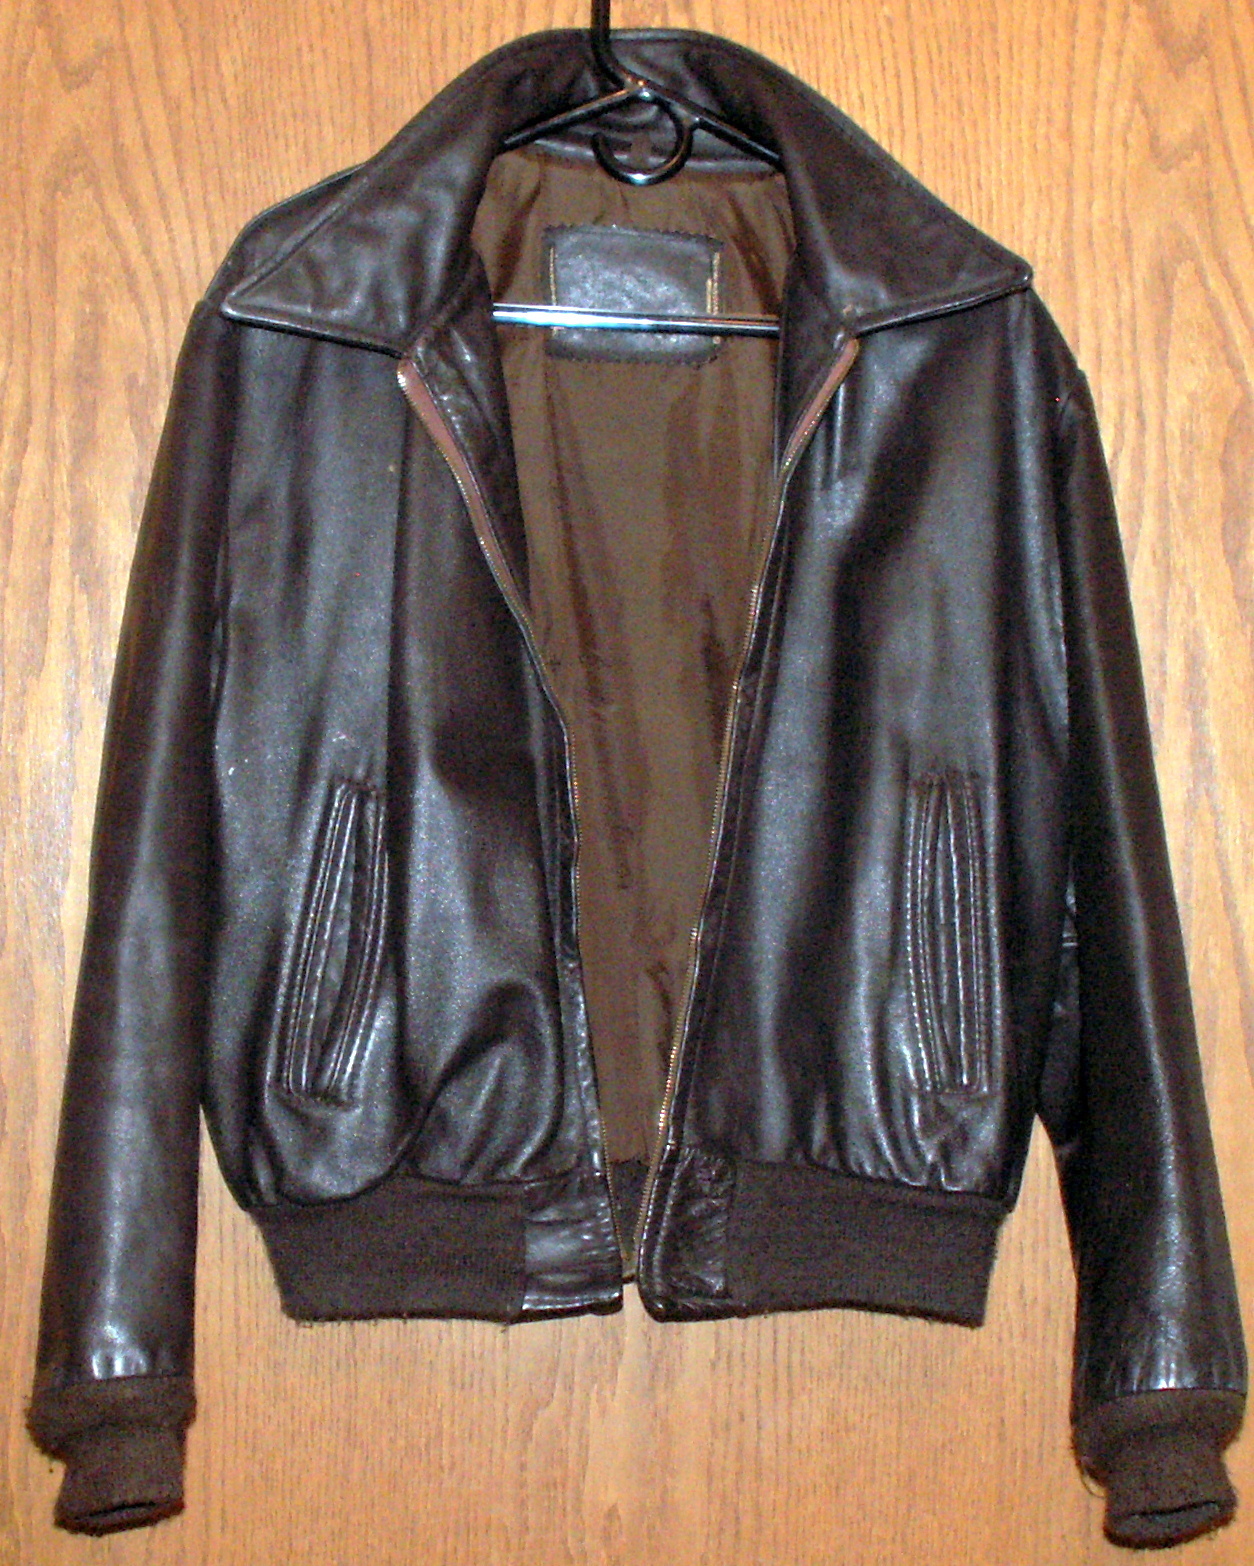 Leather Jacket Repair Restoration The Fedora Lounge